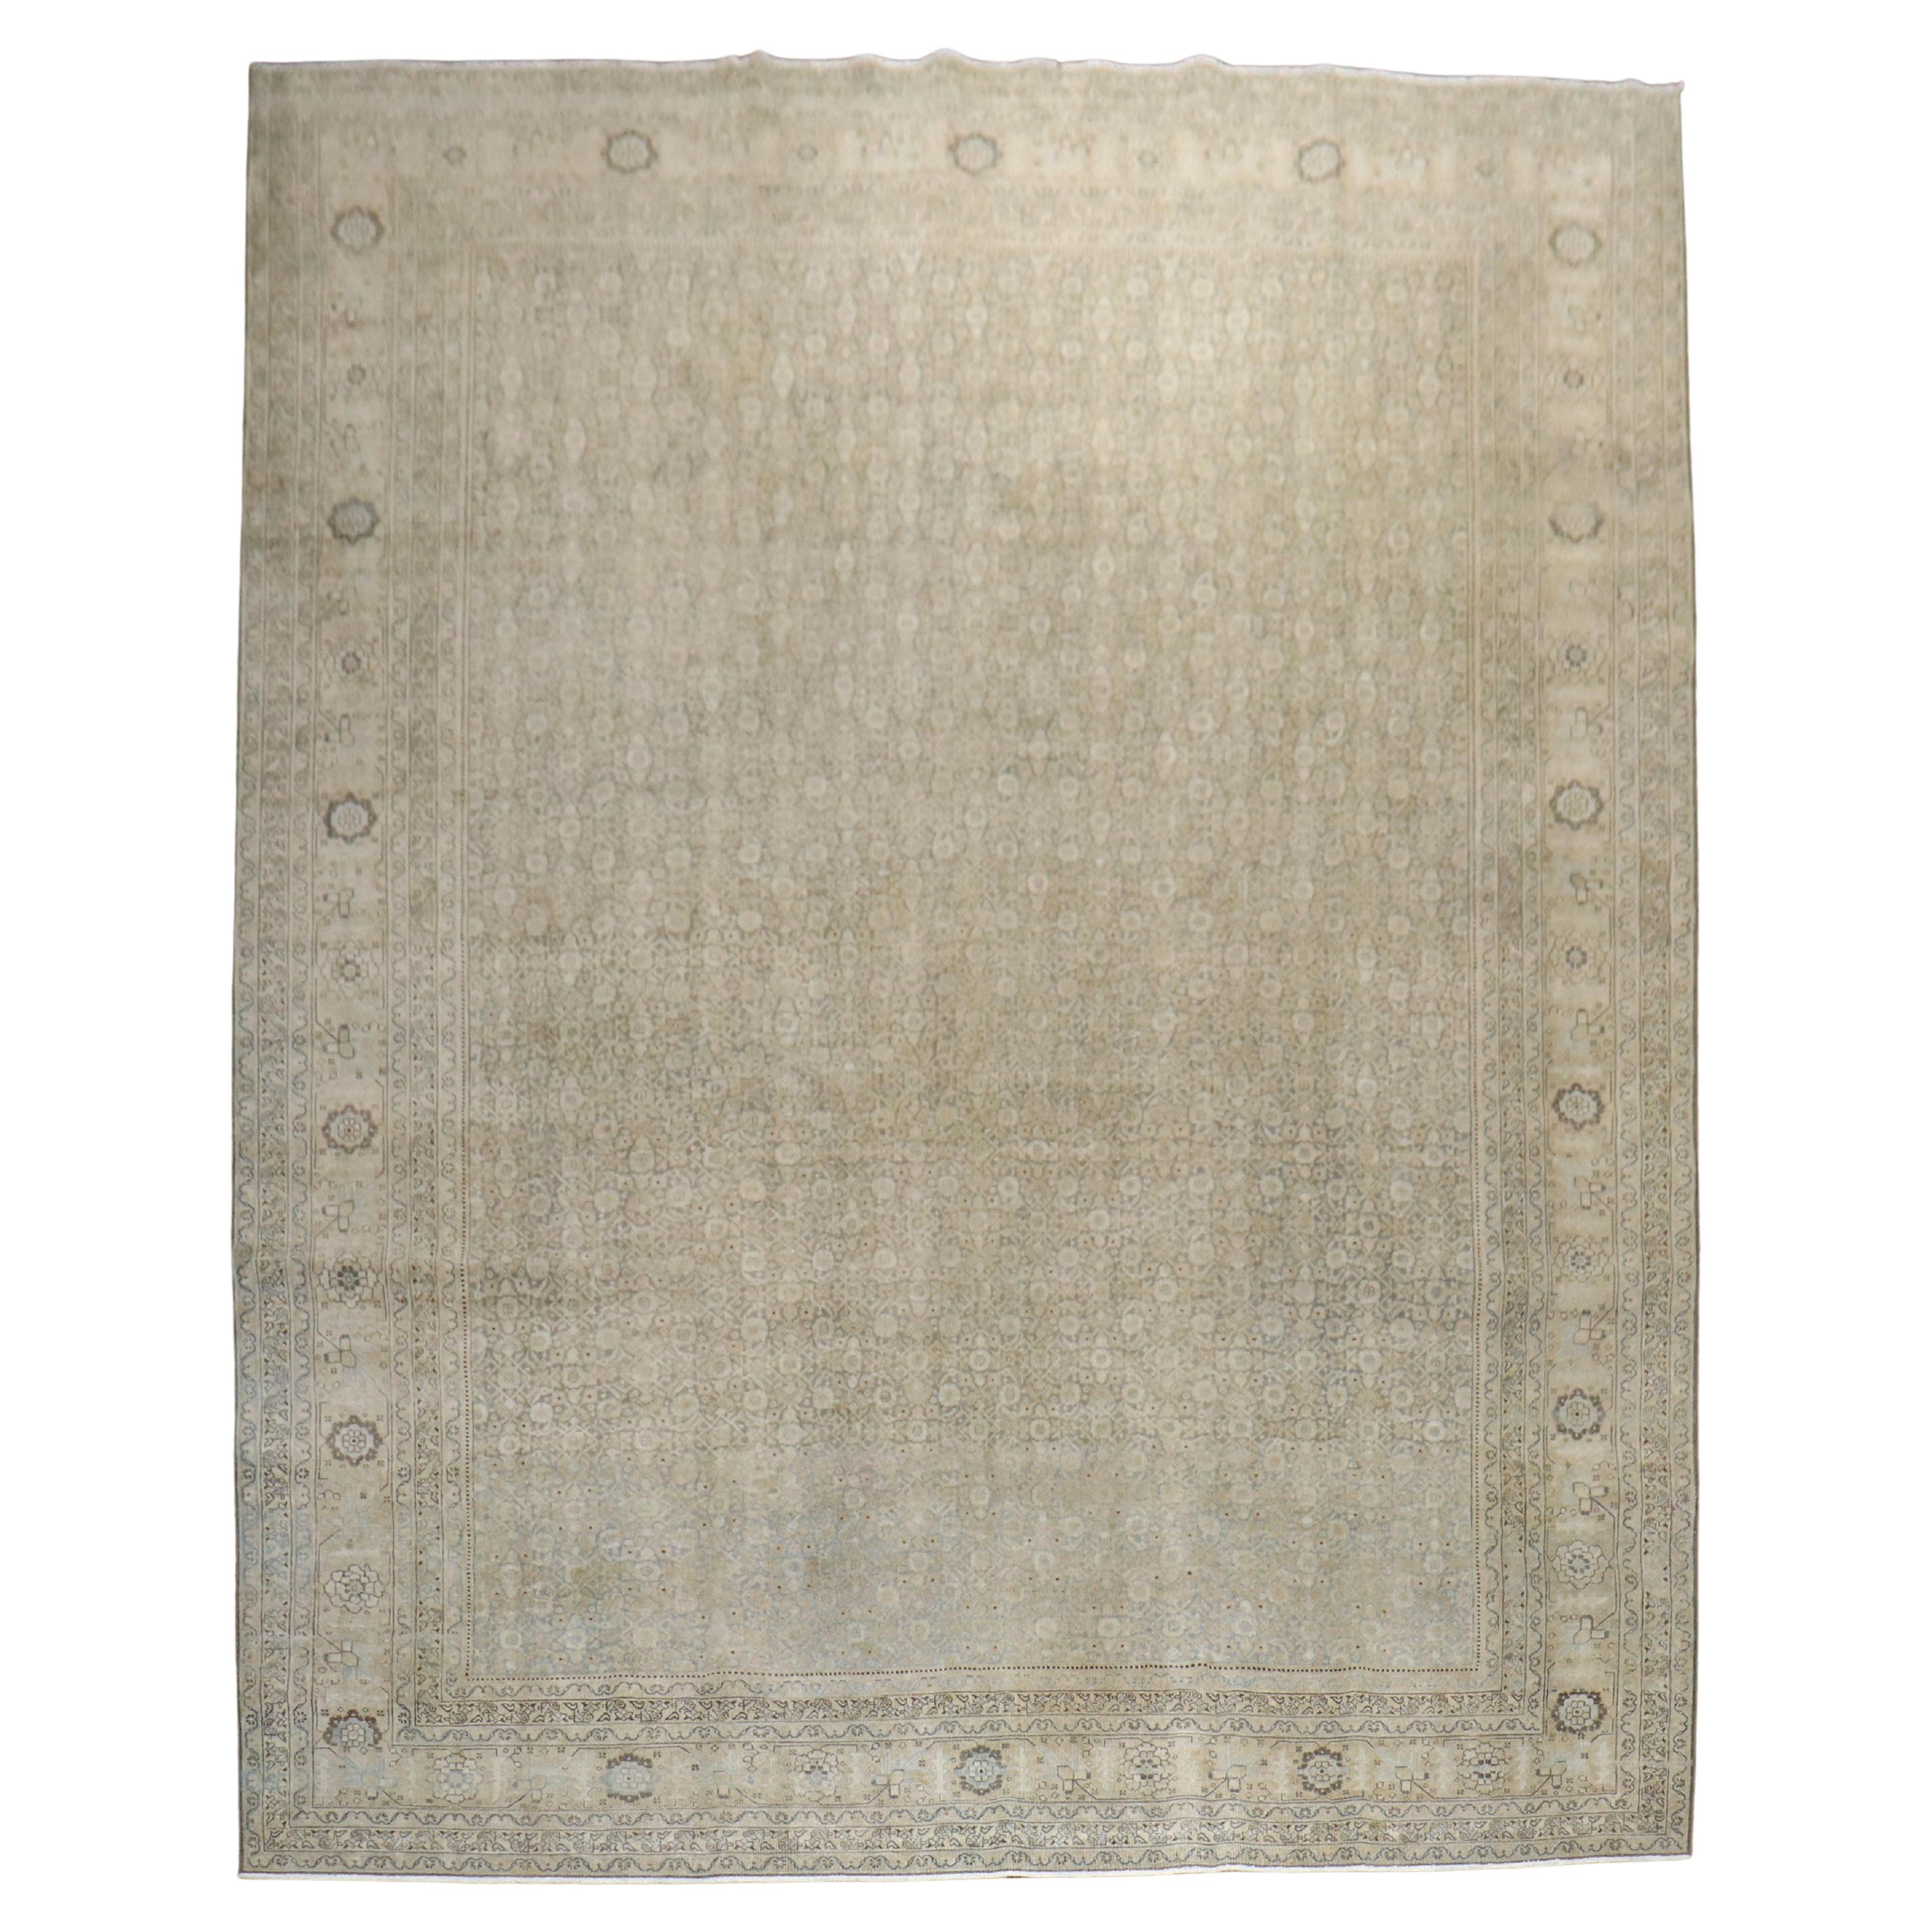 Antique Persian Slate Gray Tabriz Carpet For Sale